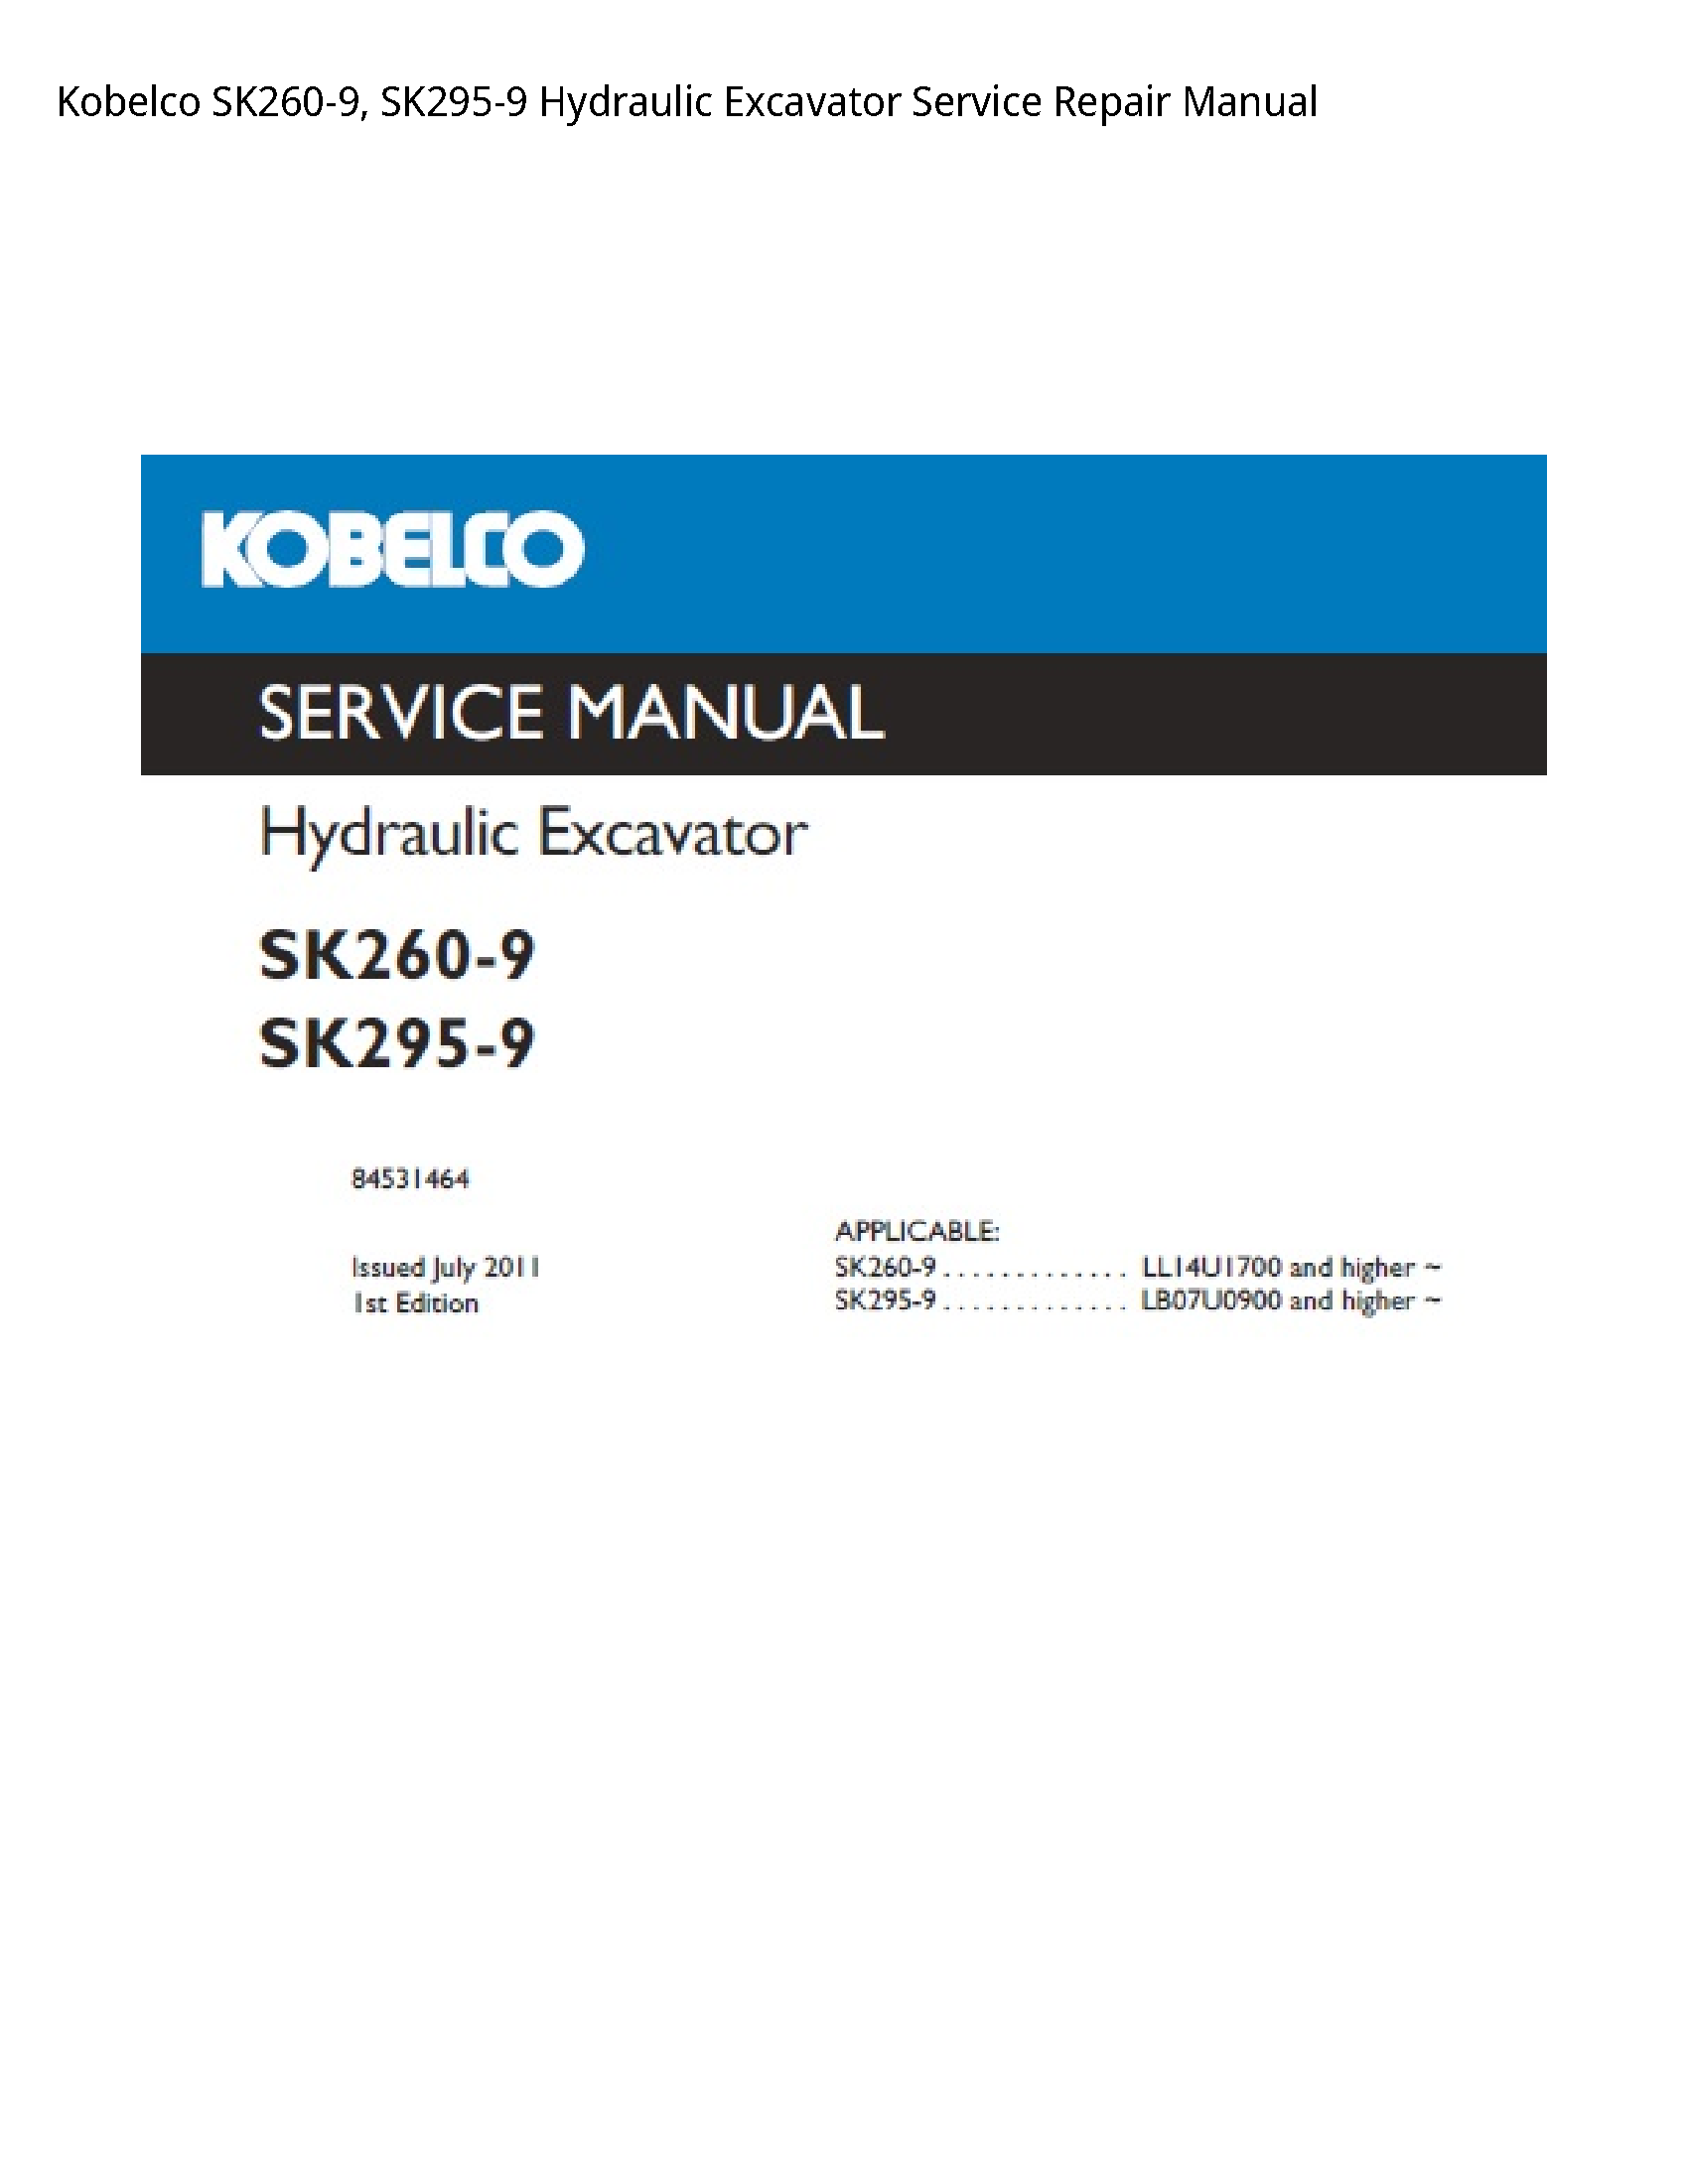 Kobelco SK260-9 Hydraulic Excavator manual